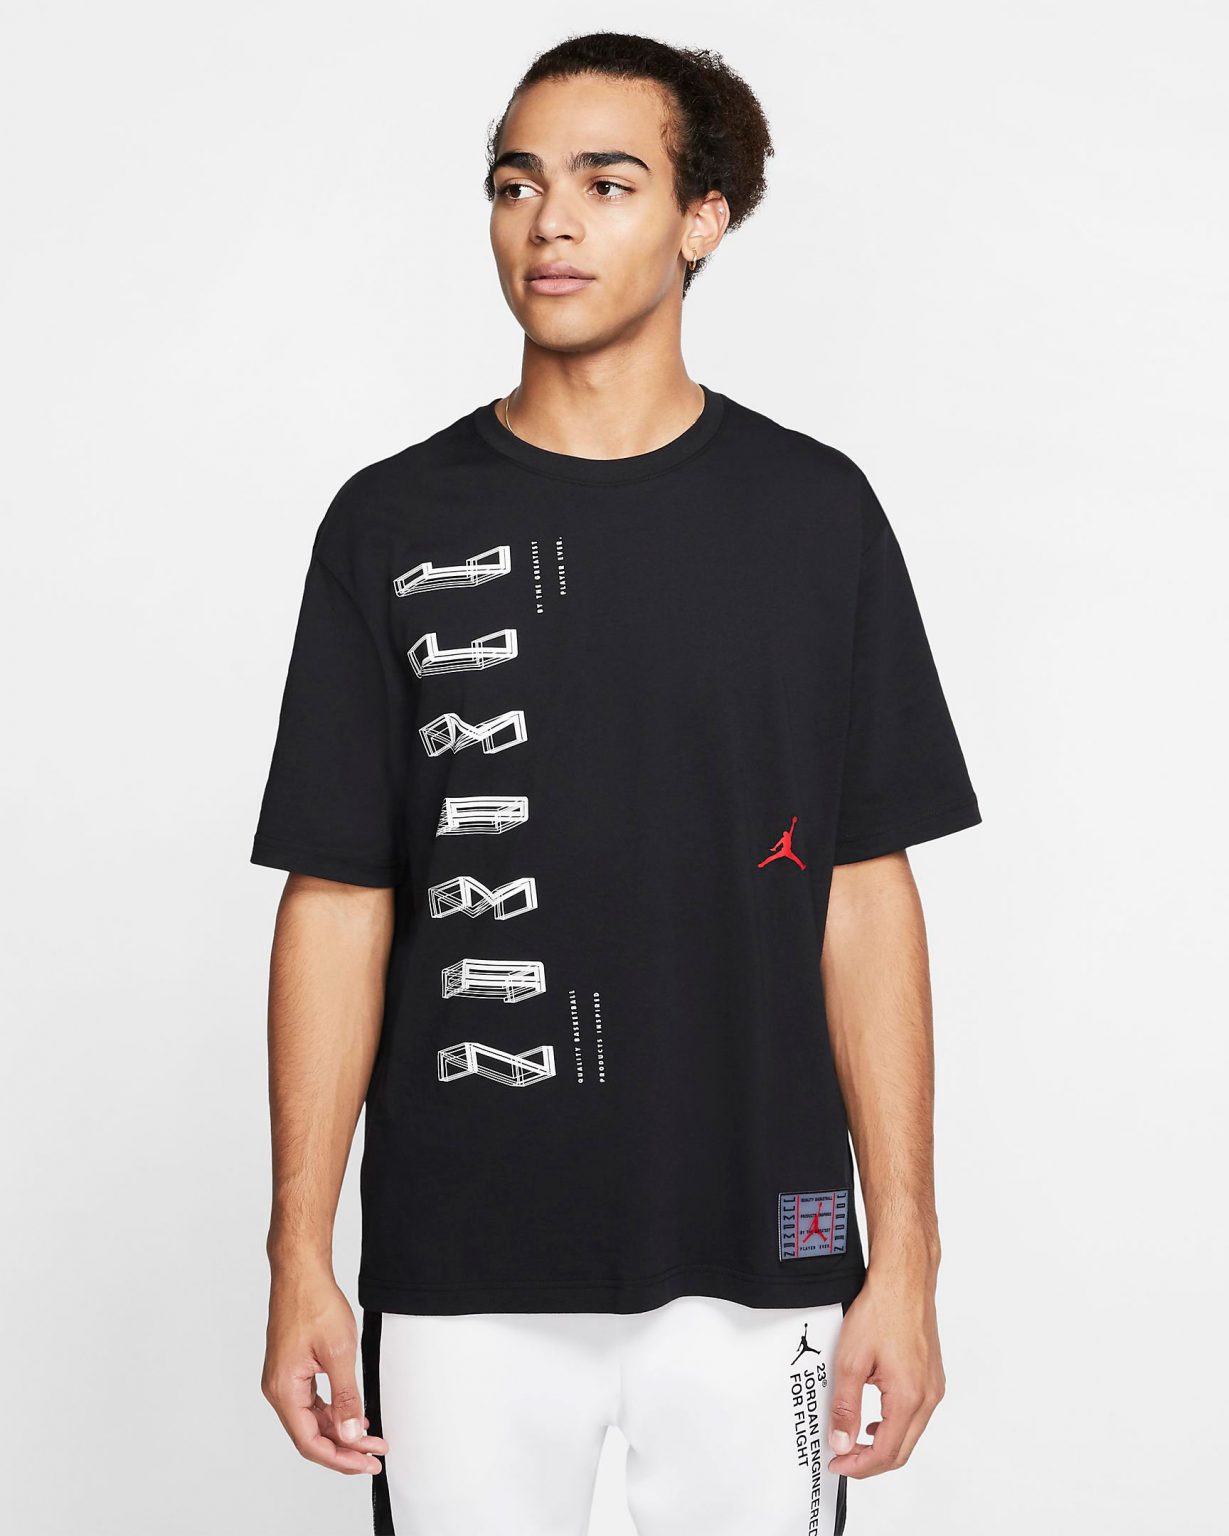 Air Jordan 11 Bred 2019 Shirt | SneakerFits.com